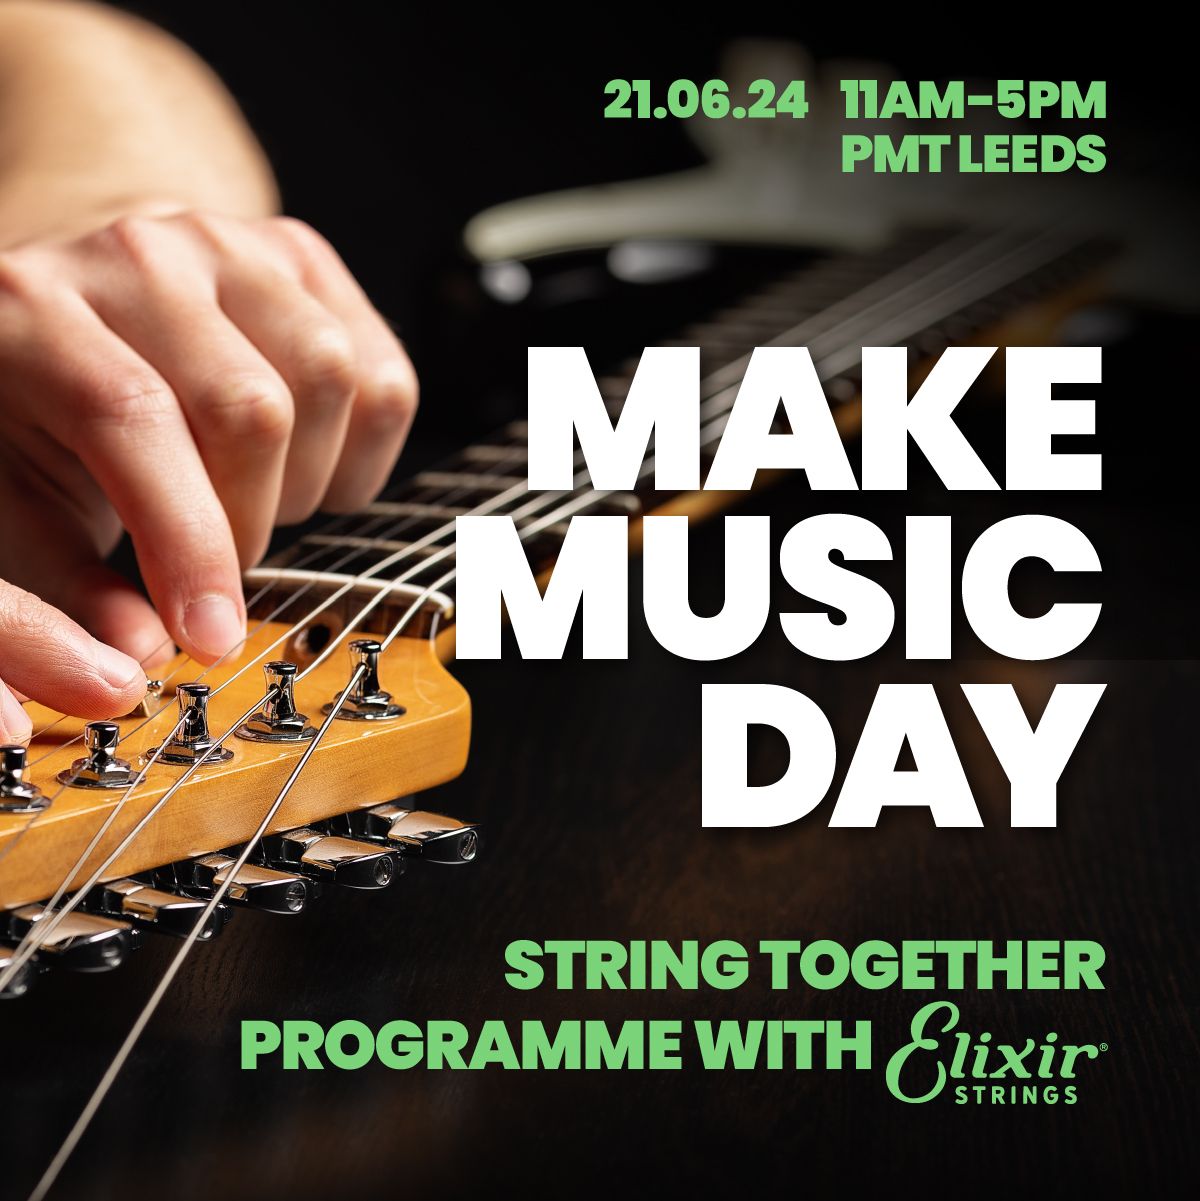 Make Music Day - String Together Programme with Elixir at PMT Leeds